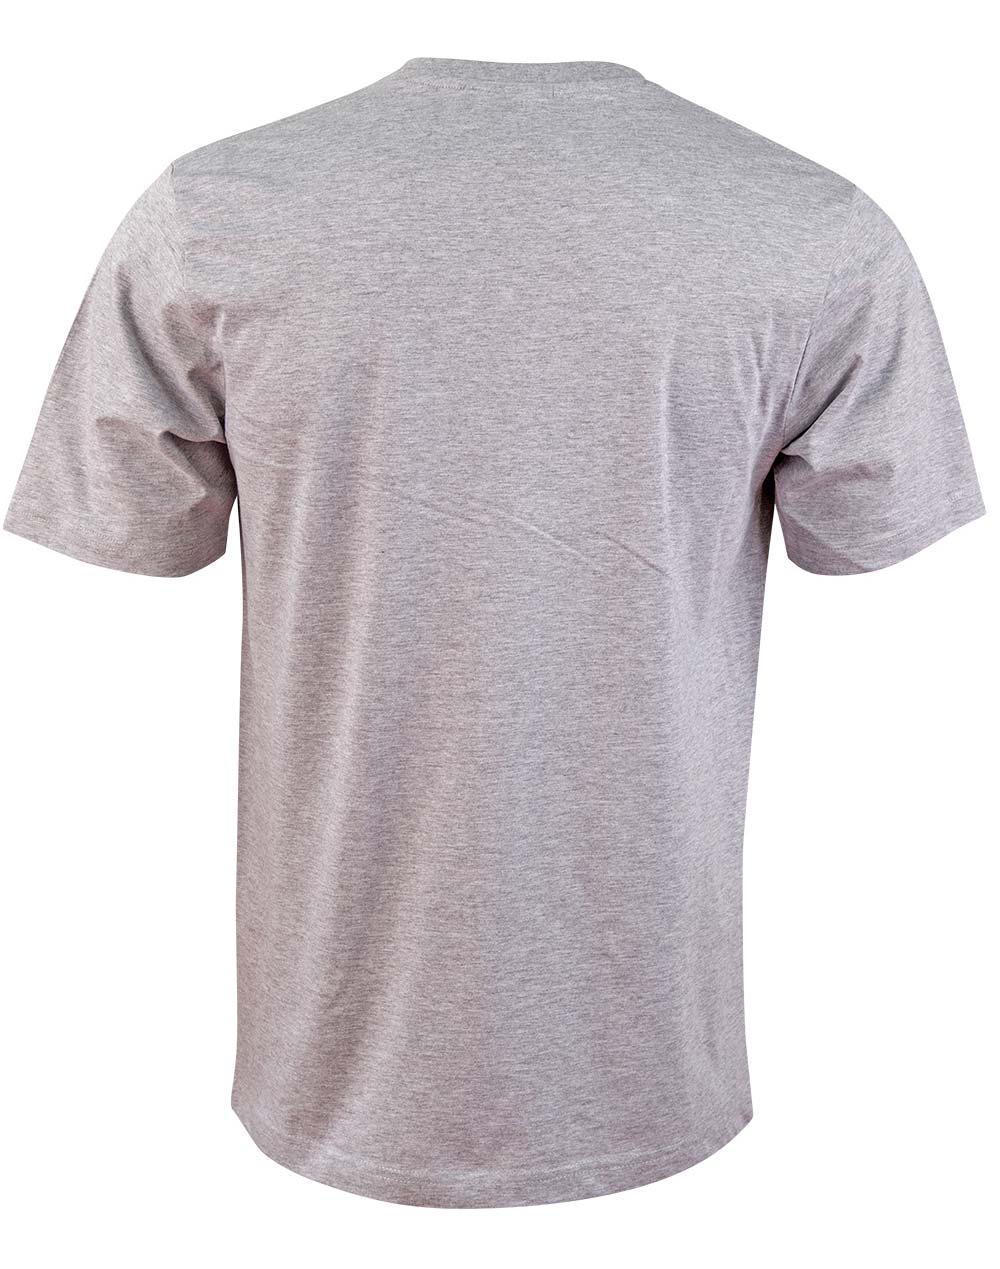 Custom (Gold) Semi-Fitted T-Shirts Men's Cotton Online in Perh Australia